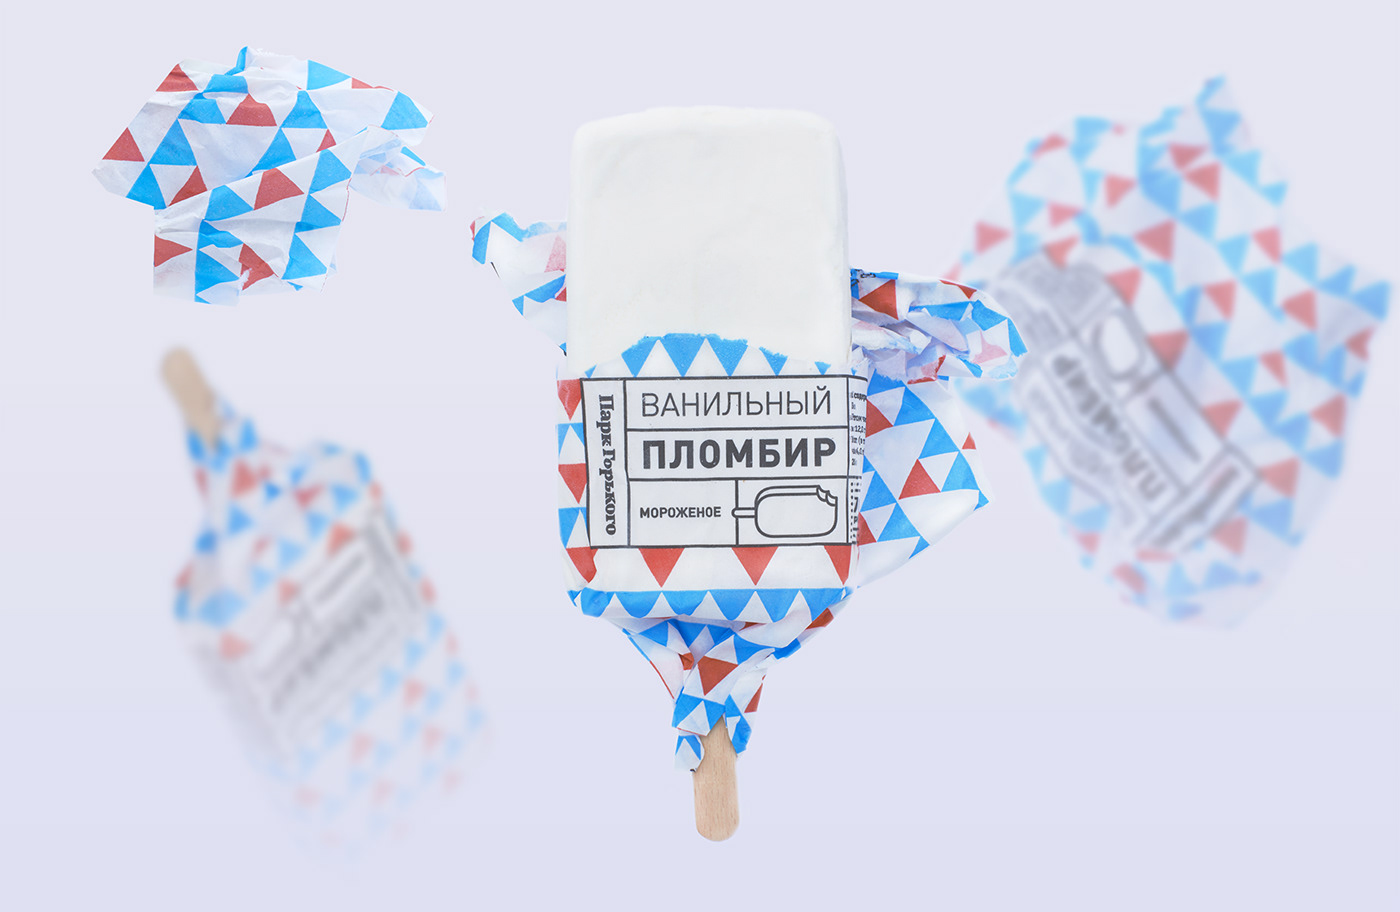 мороженое парка горького Мороженое паттерн упаковка мороженого  Gorky Park icecream pattern Flavours ice cream gorky park